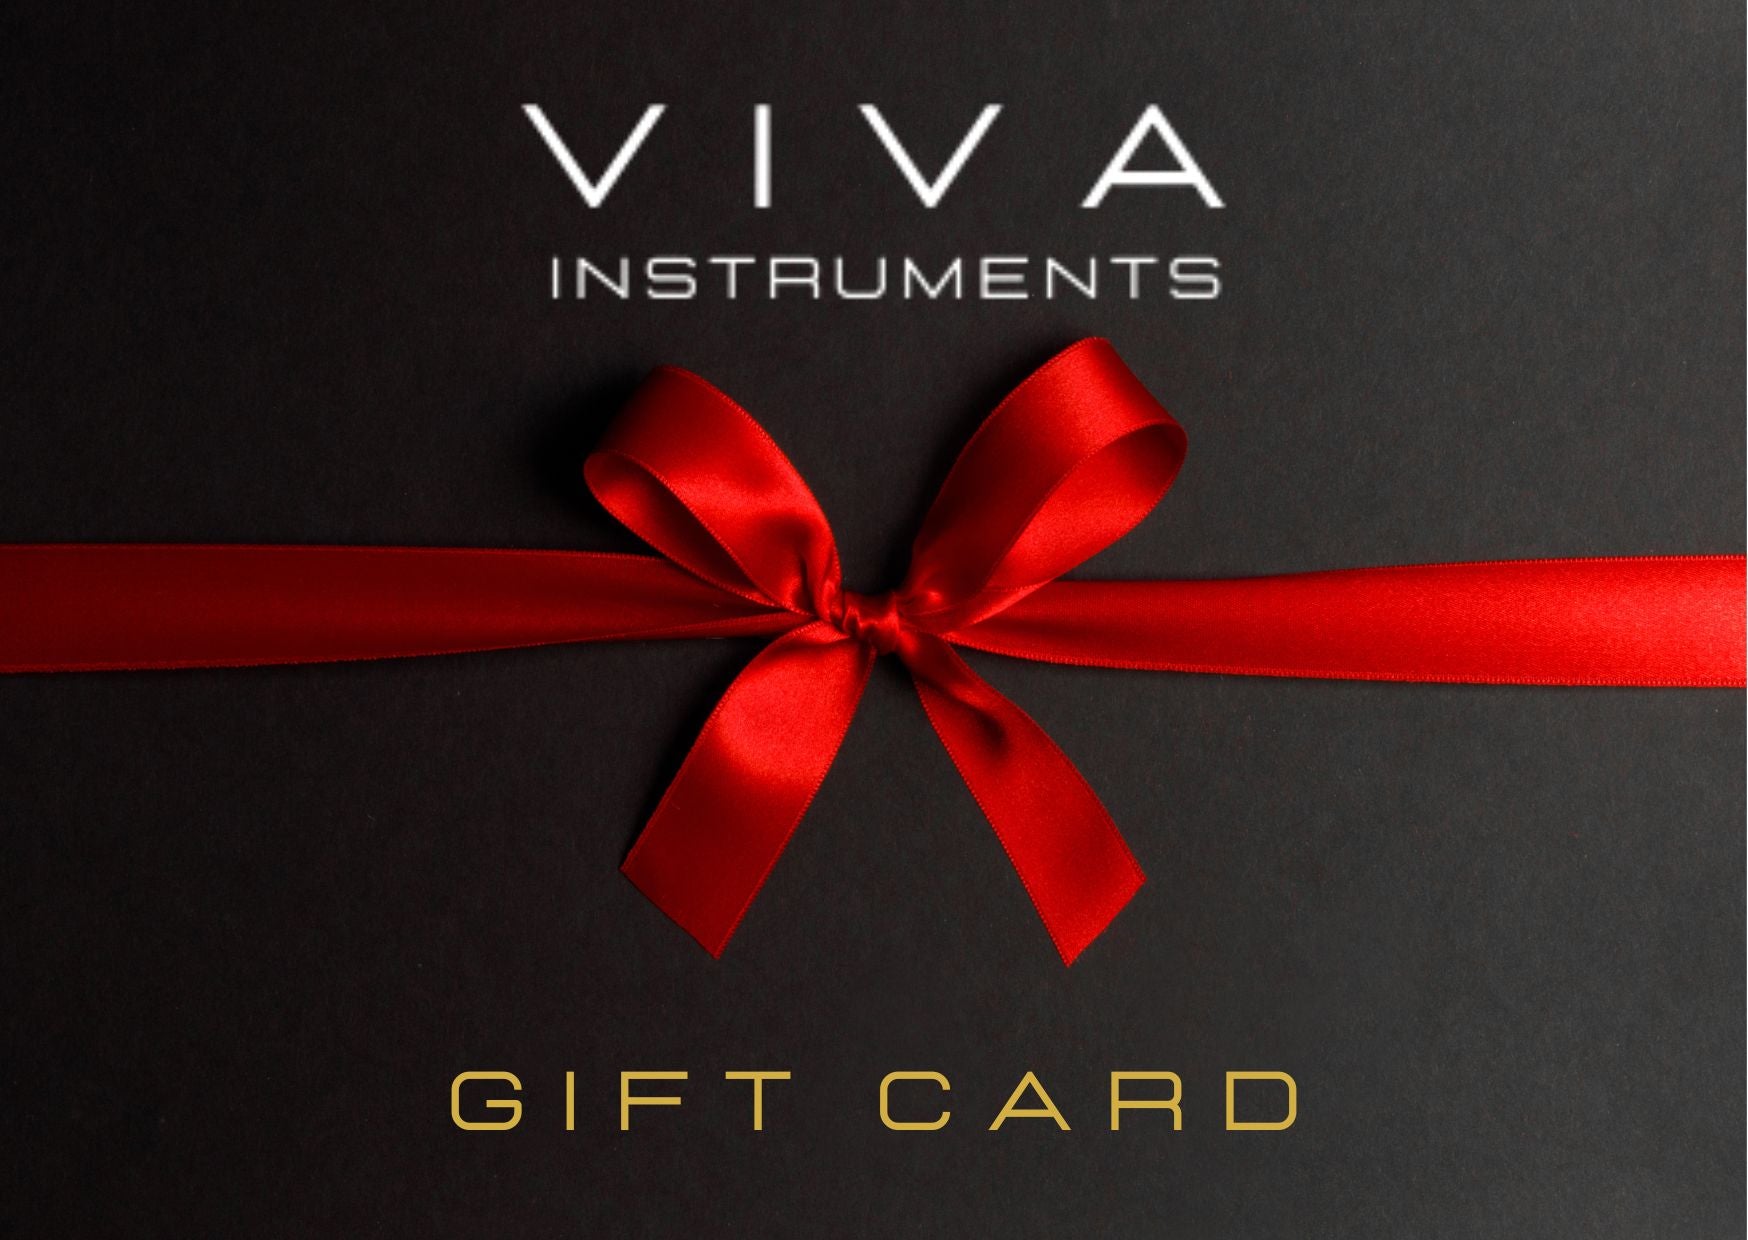 VIVA INSTRUMENTS GIFT CARD